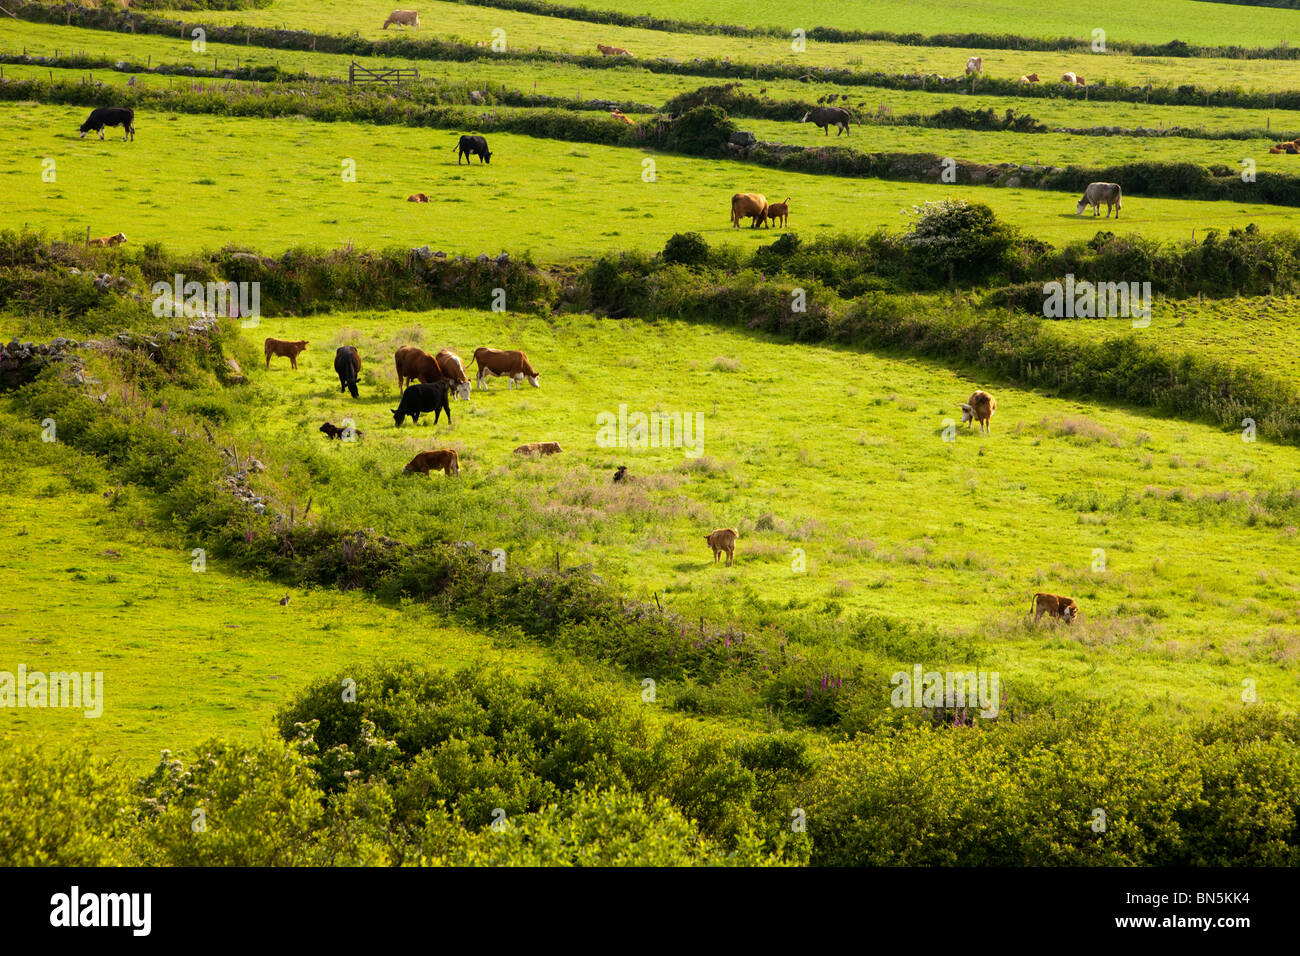 Ancient field boundaries near Zennor, Cornwall, UK. Stock Photo